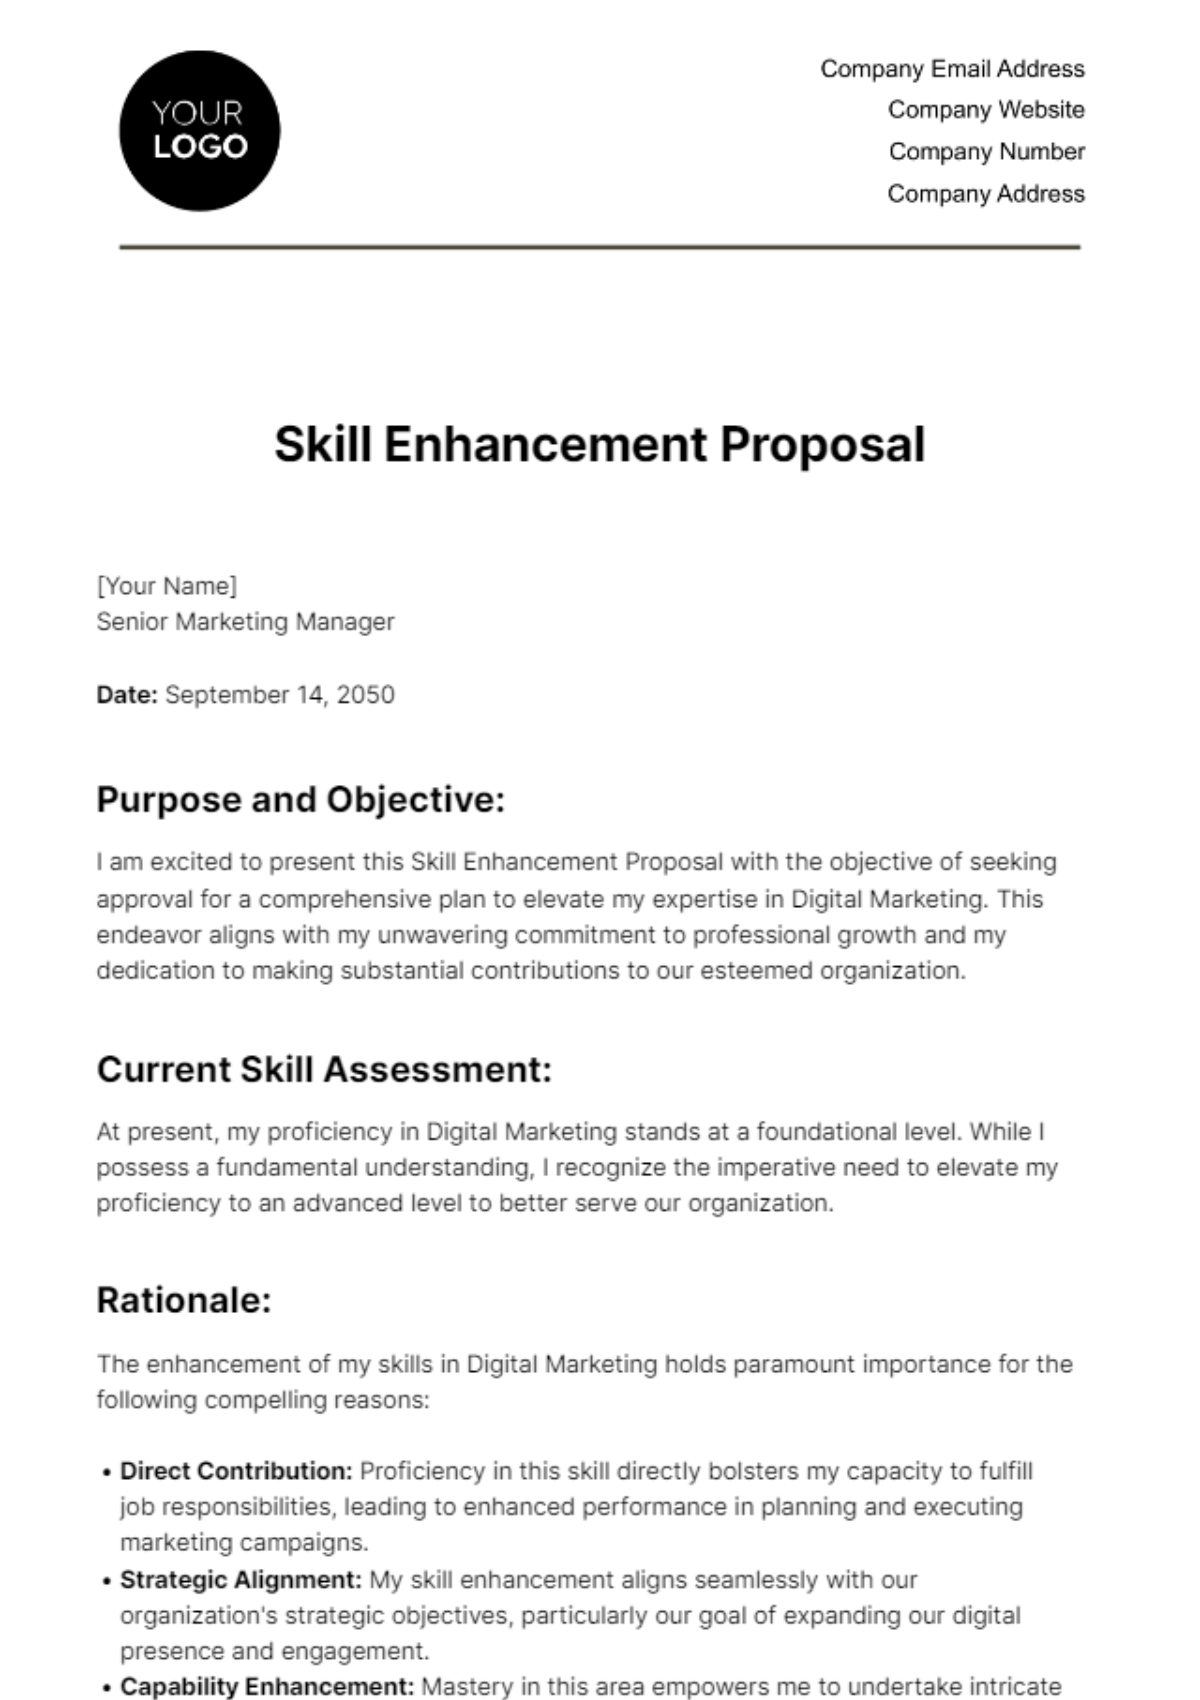 Skill Enhancement Proposal HR Template